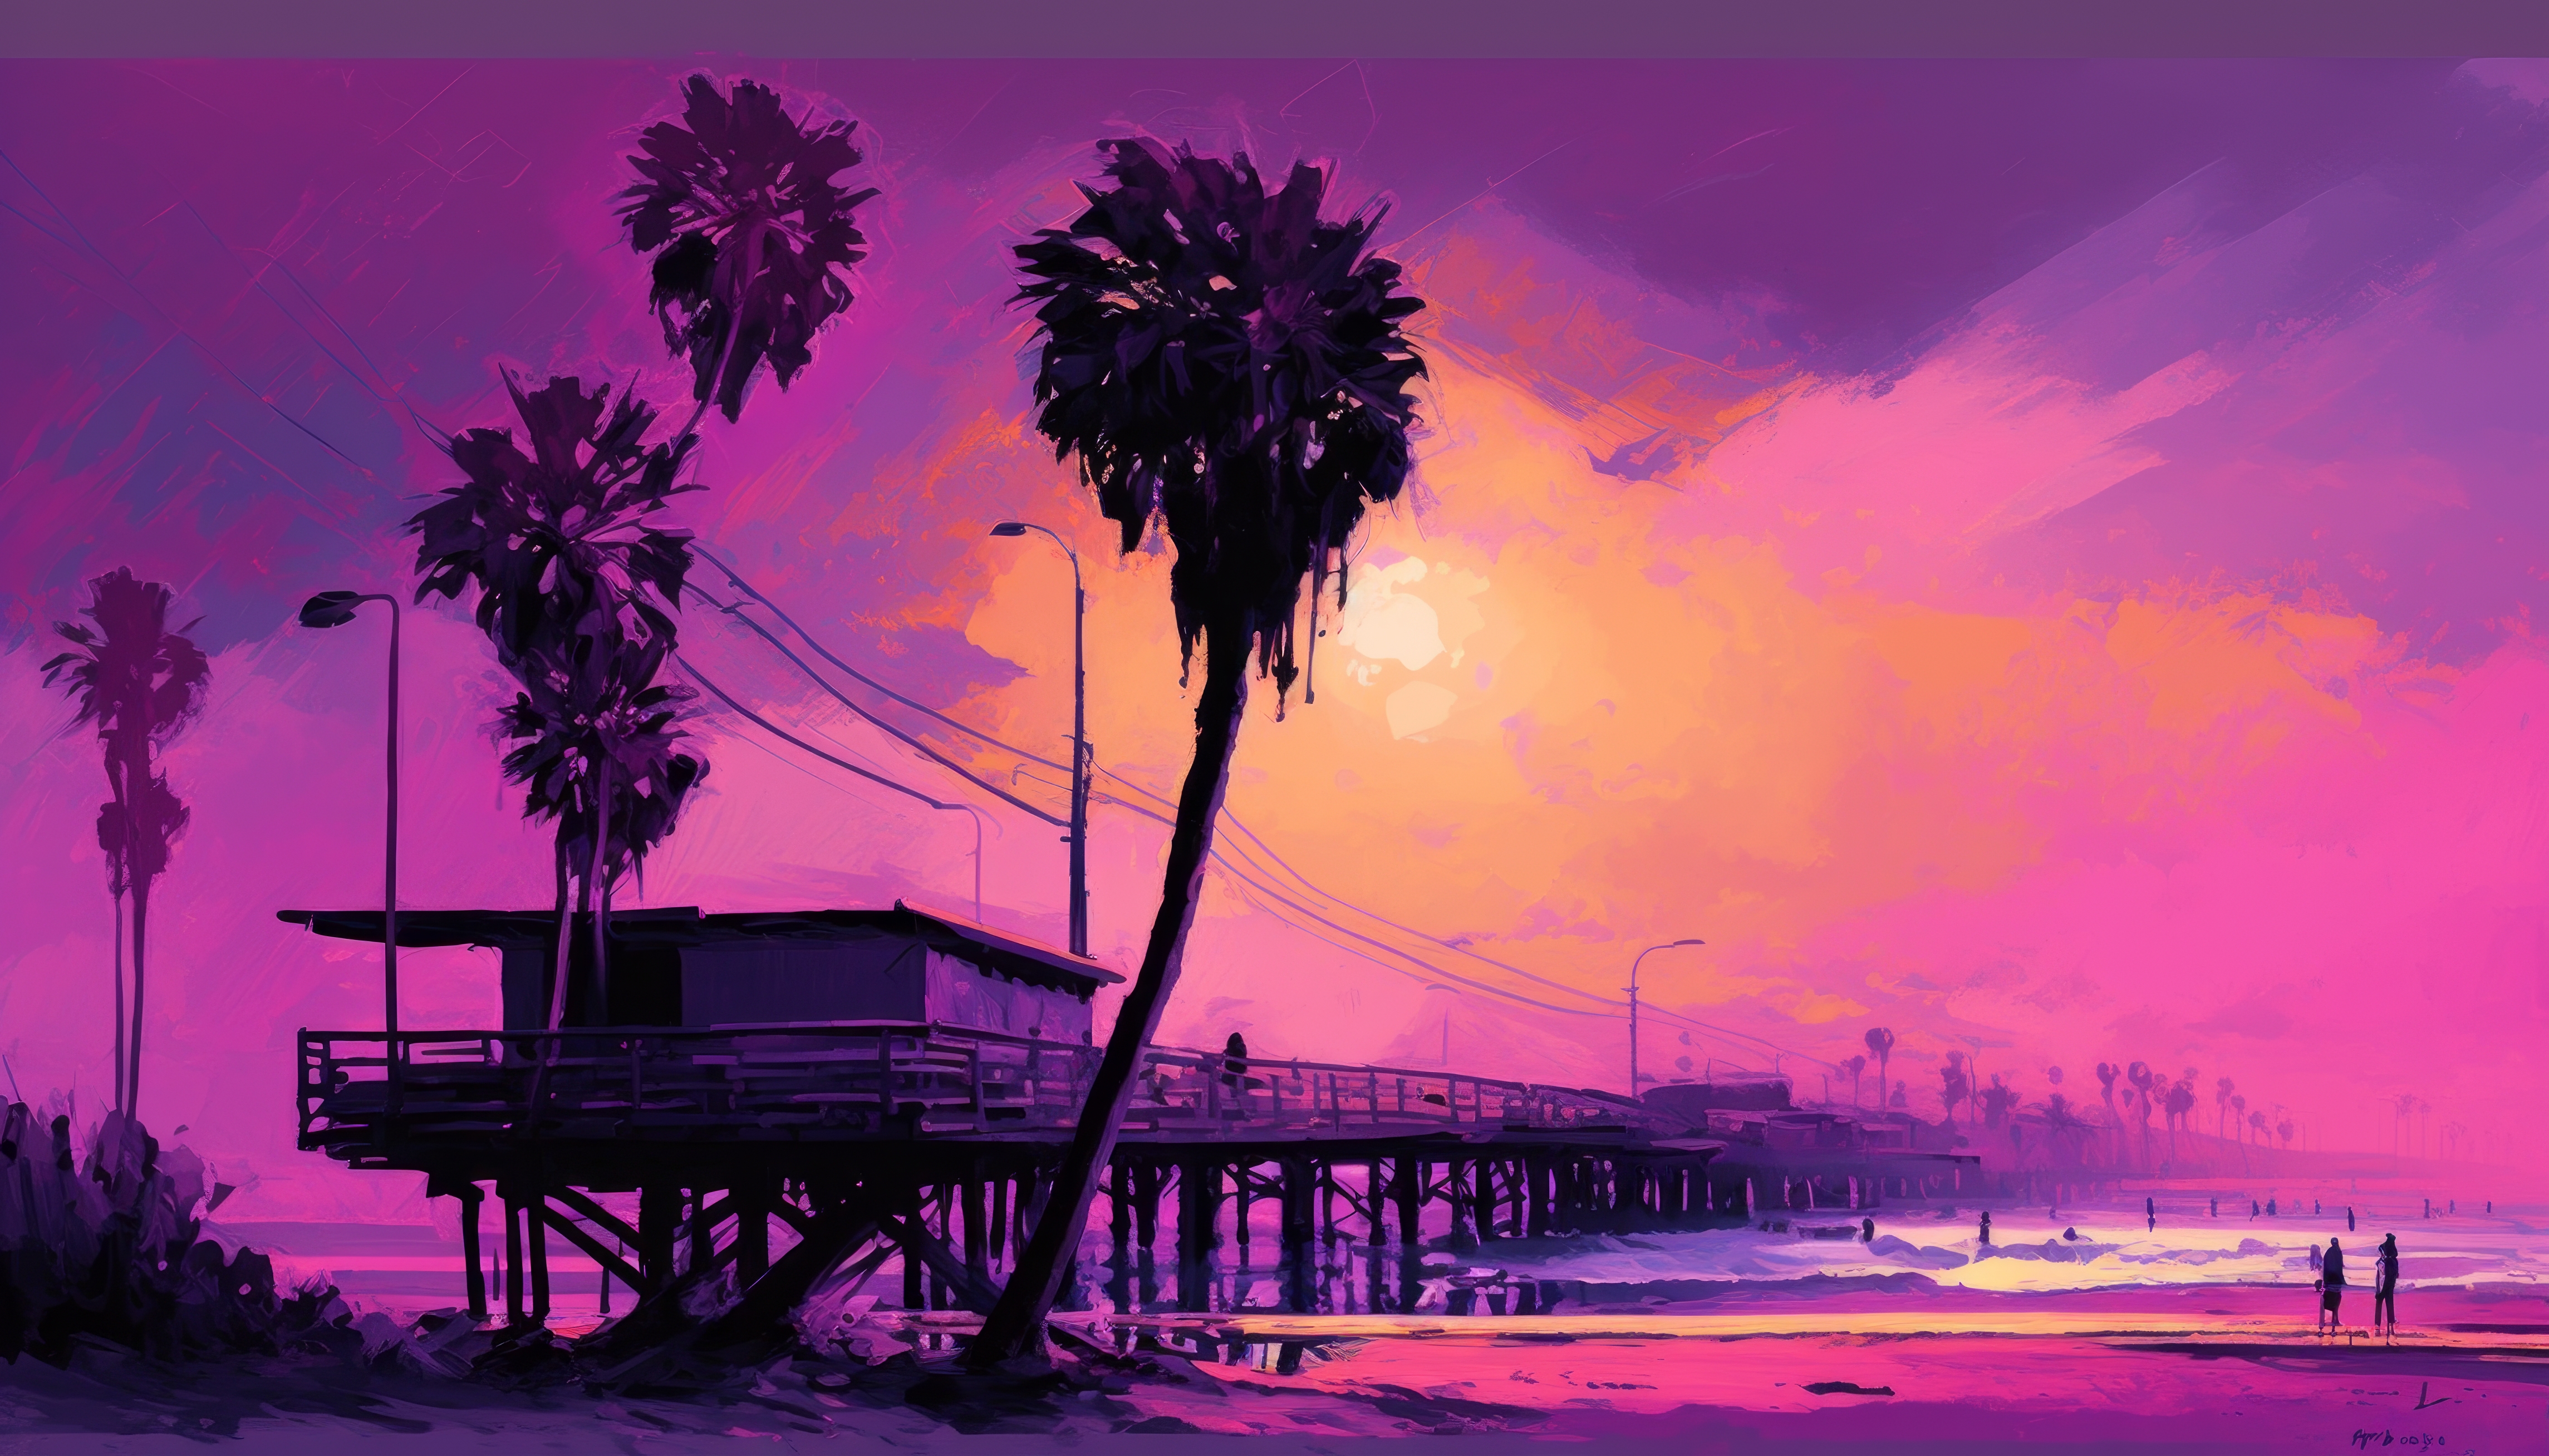 Ai Art Illustration Venice Beach Sunset Painting Palm Trees Water Watermarked Digital Art 4579x2616